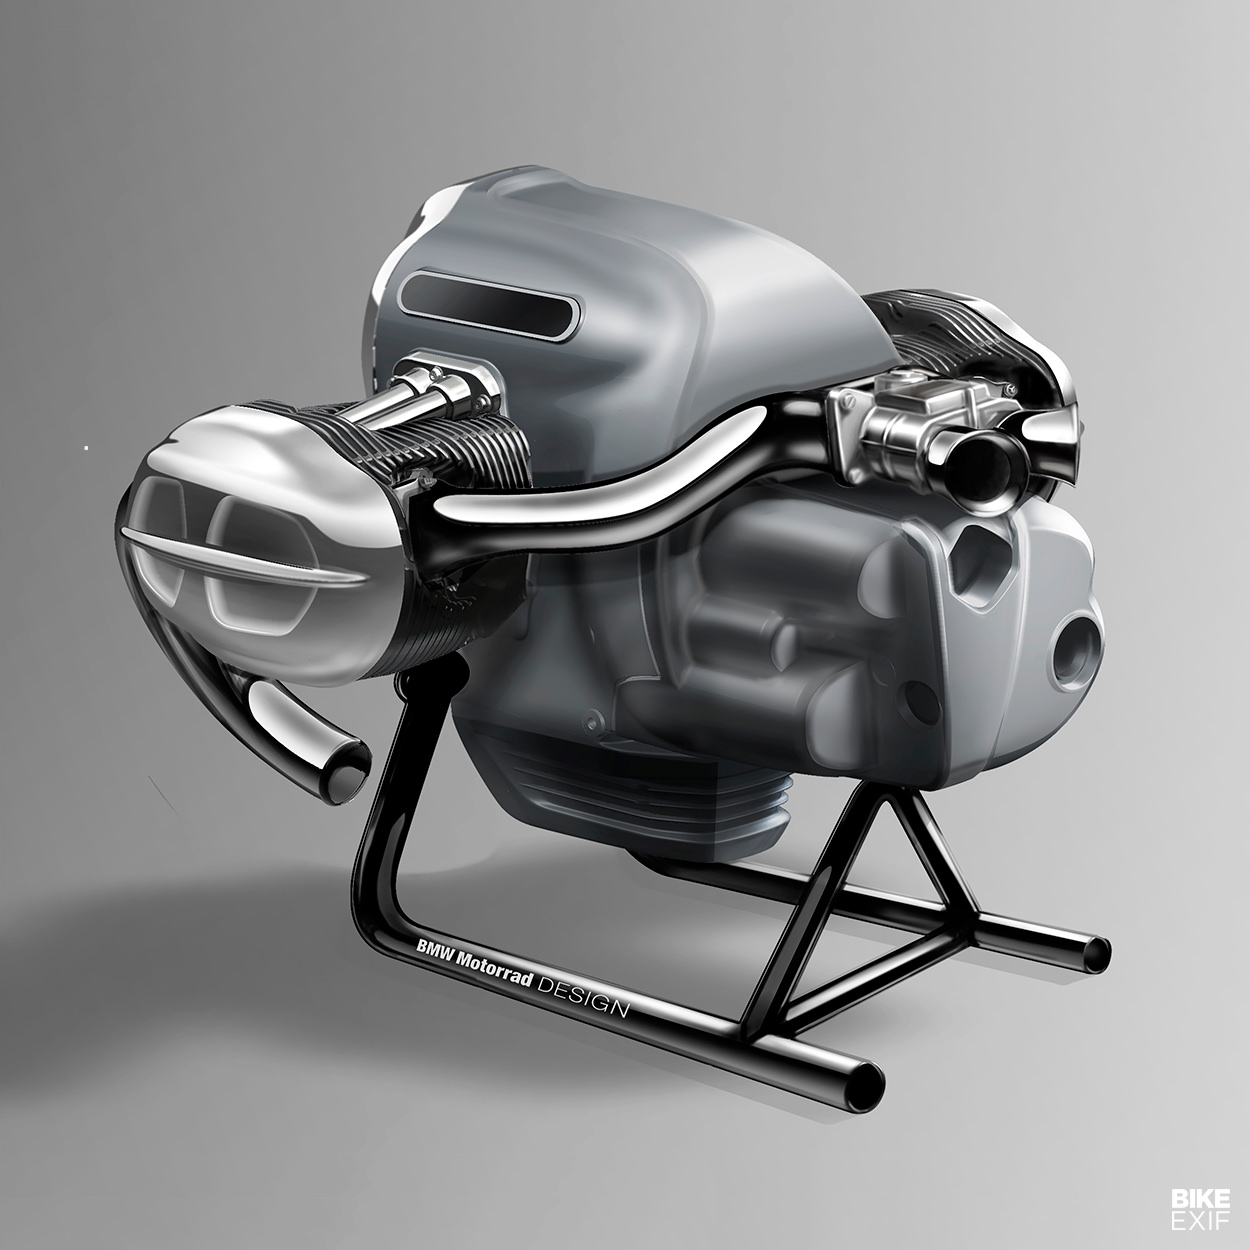 New BMW 1800cc boxer engine-12